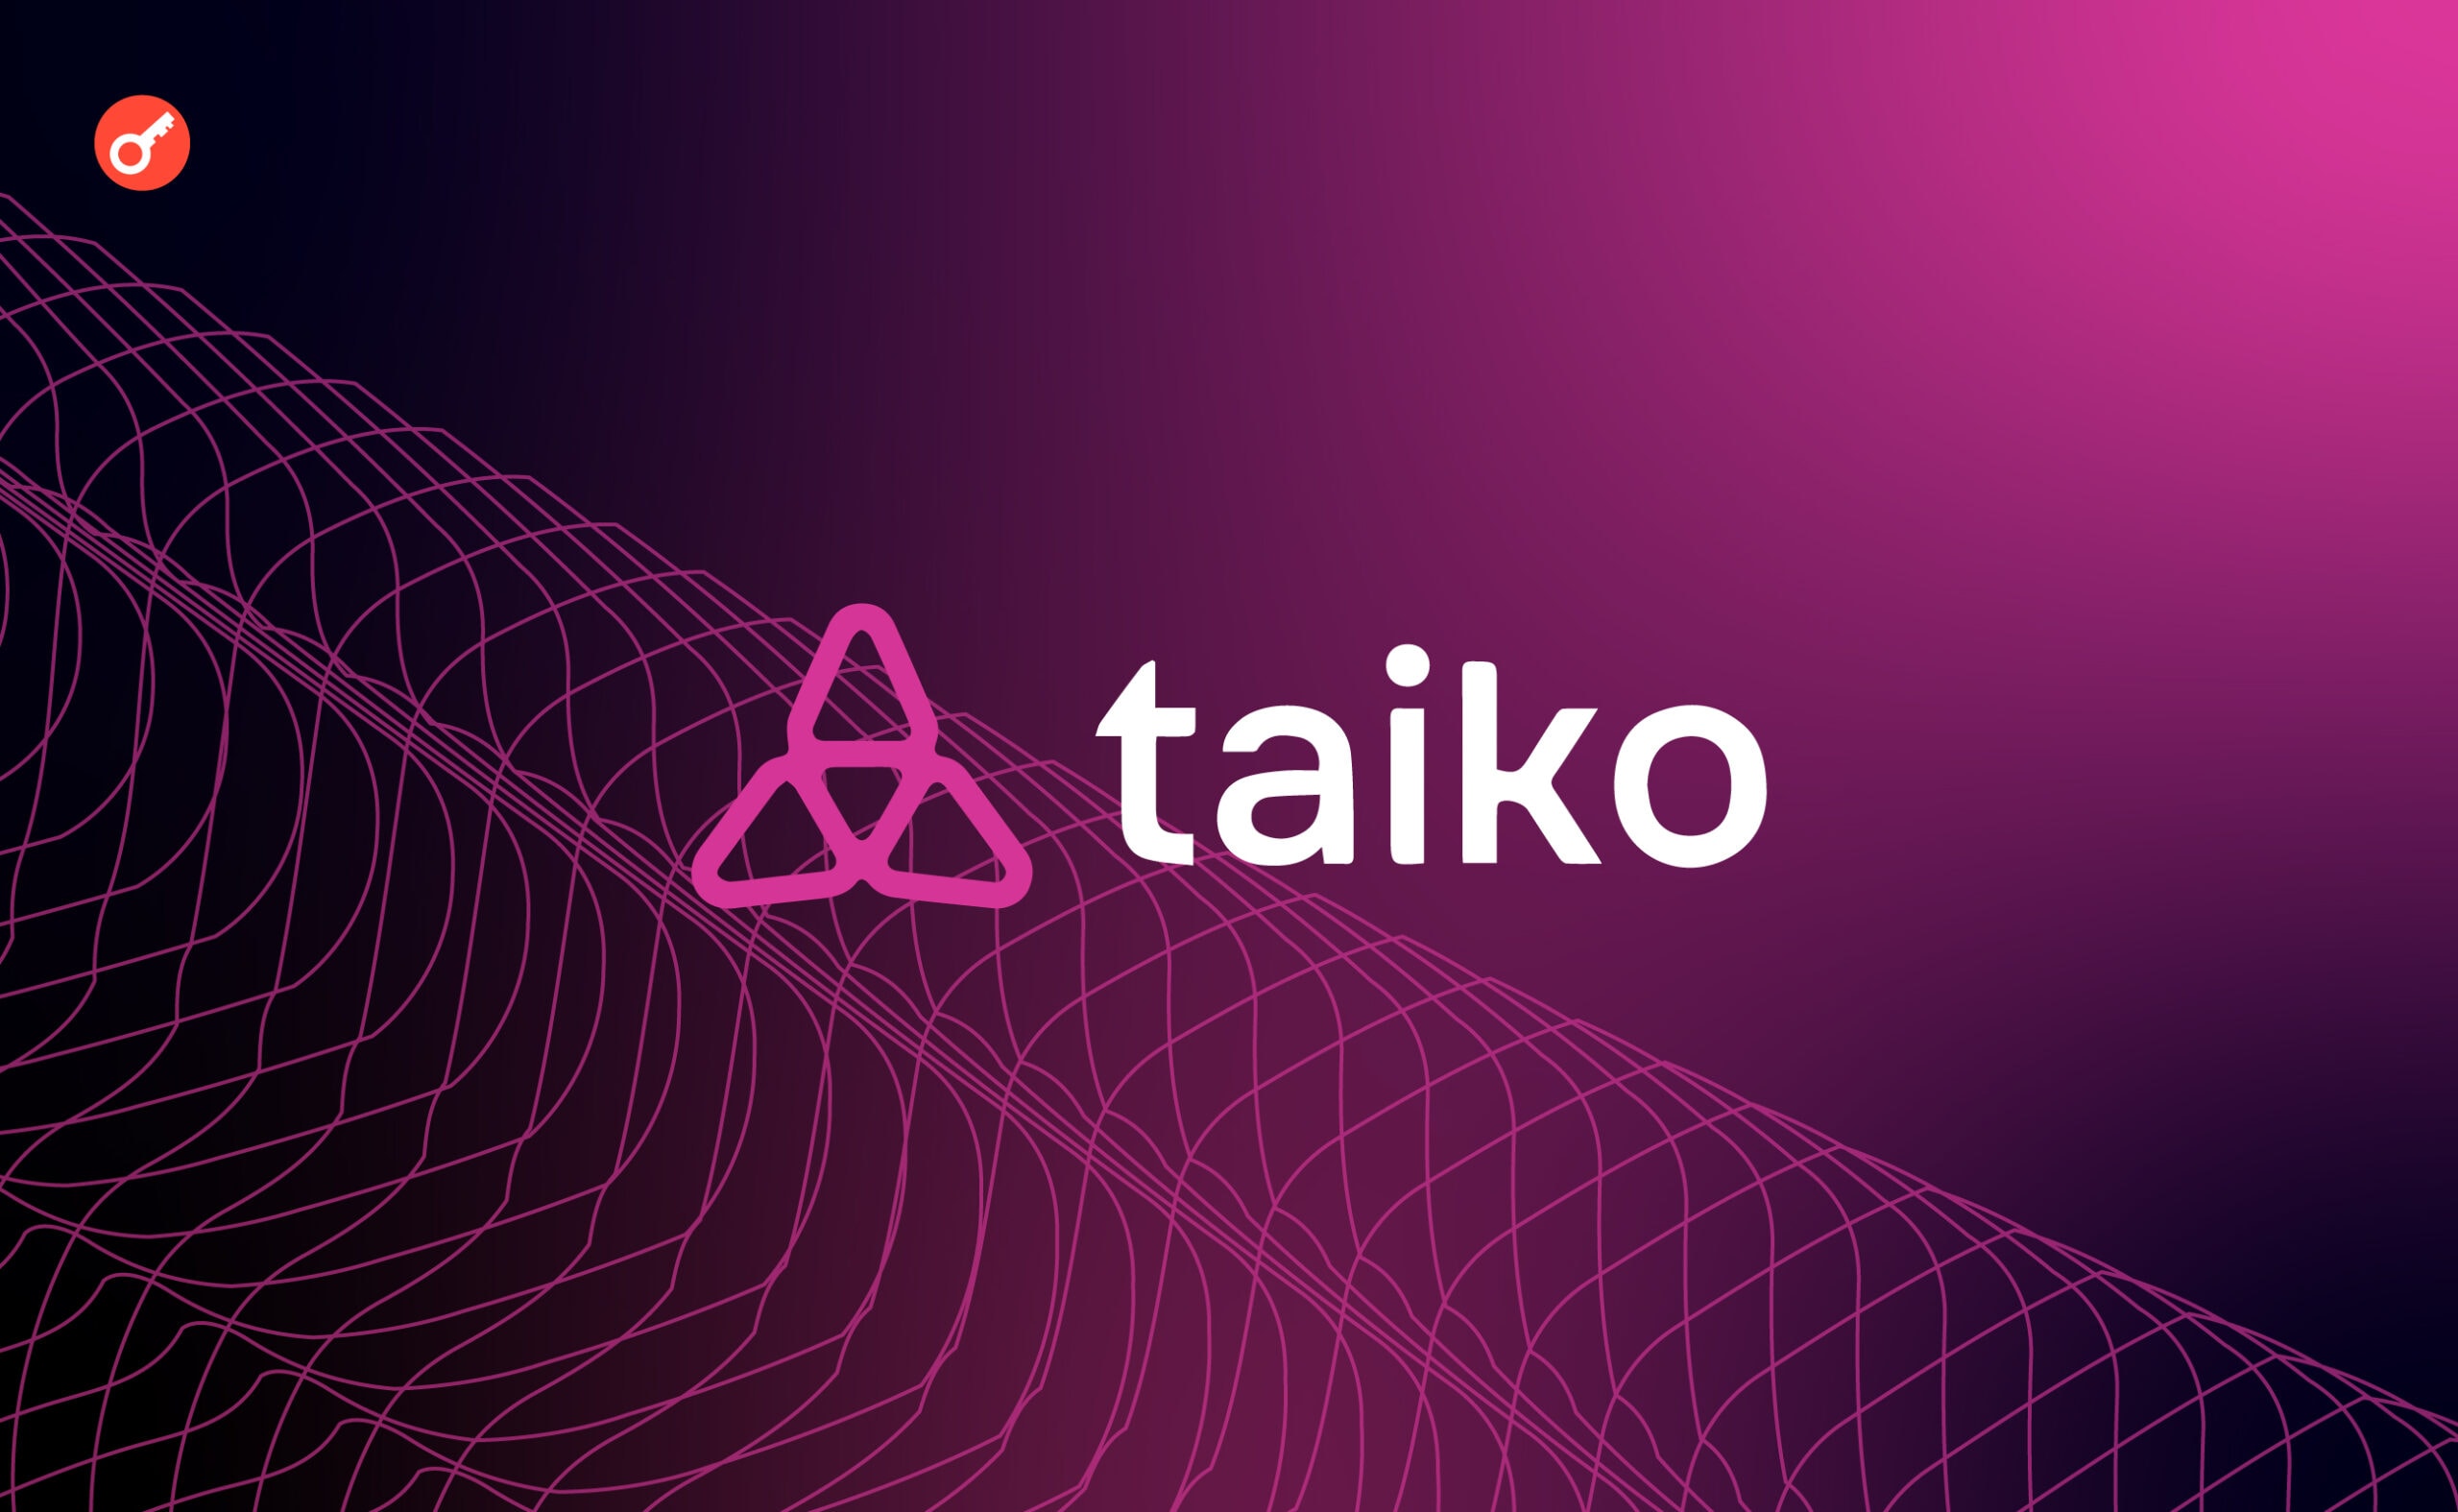 Команда проекта Taiko объявила о проведении аирдропа. Заглавный коллаж новости.